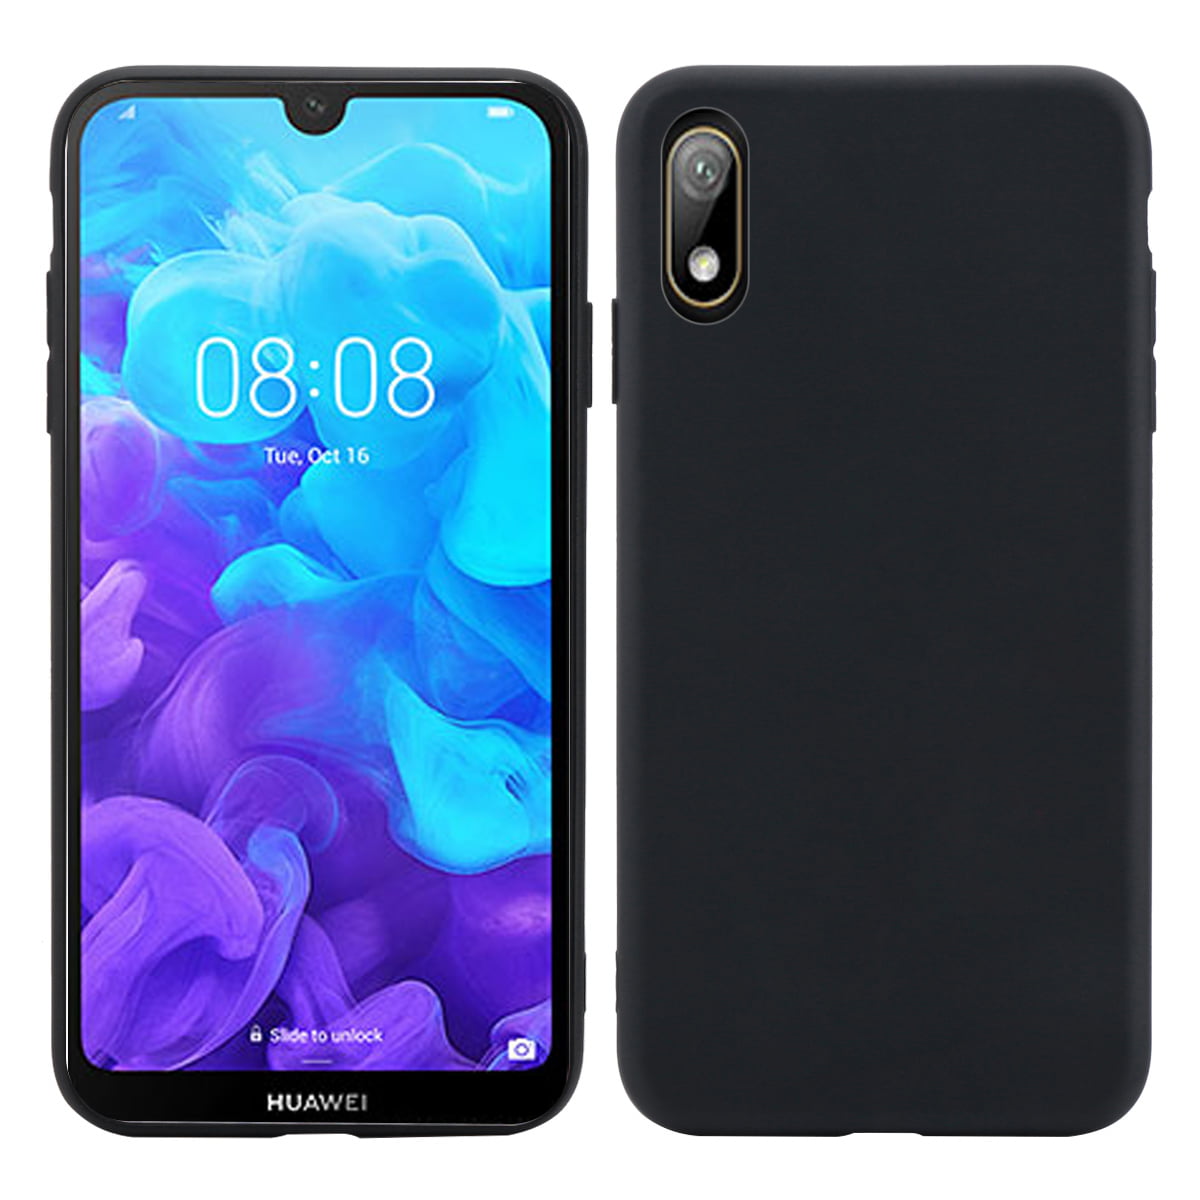 Back Case for Huawei Y5 2019 Slim Soft TPU Phone Anti-Scratch Protective Cover Black | Walmart Canada